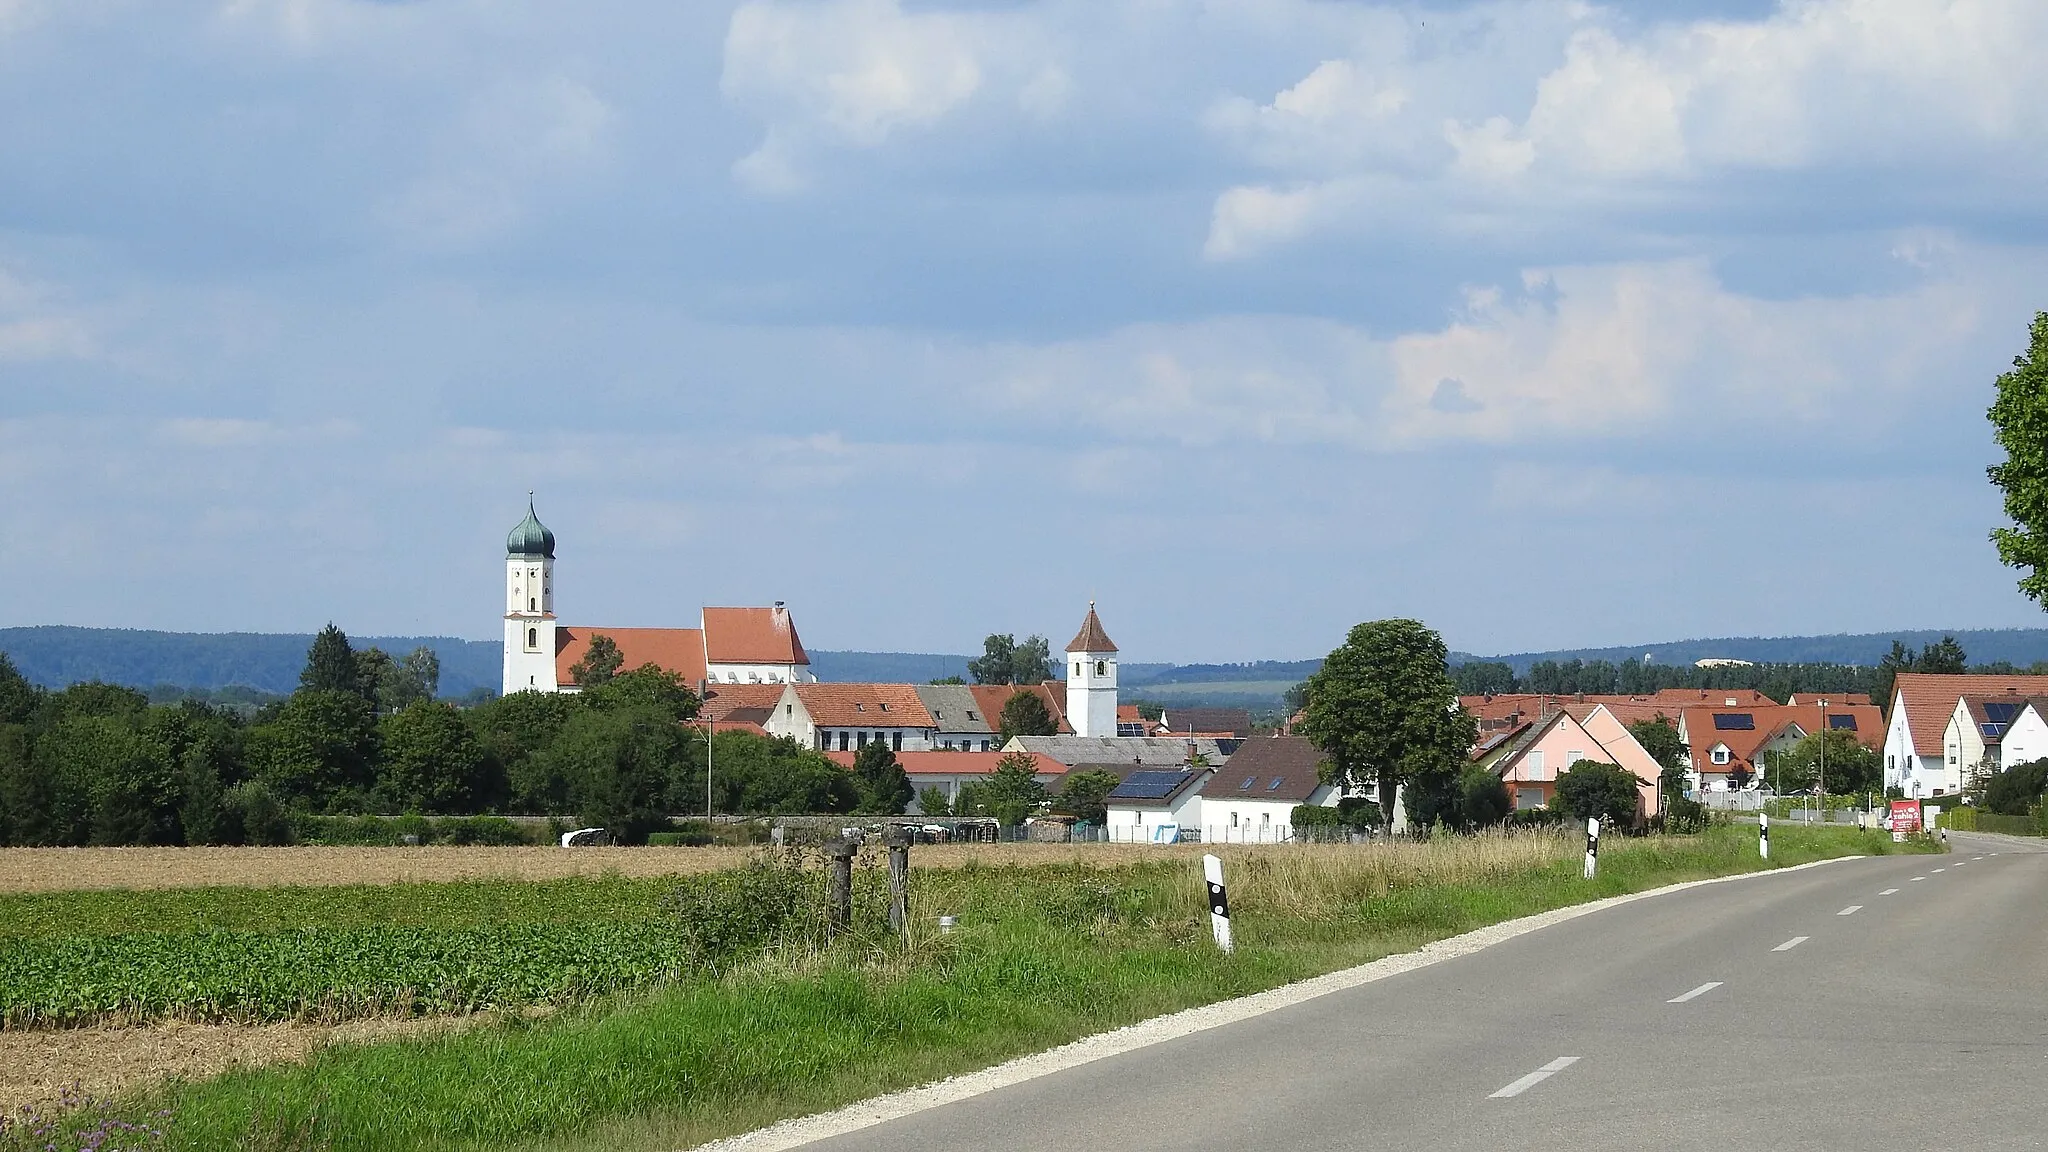 Image of Burgheim